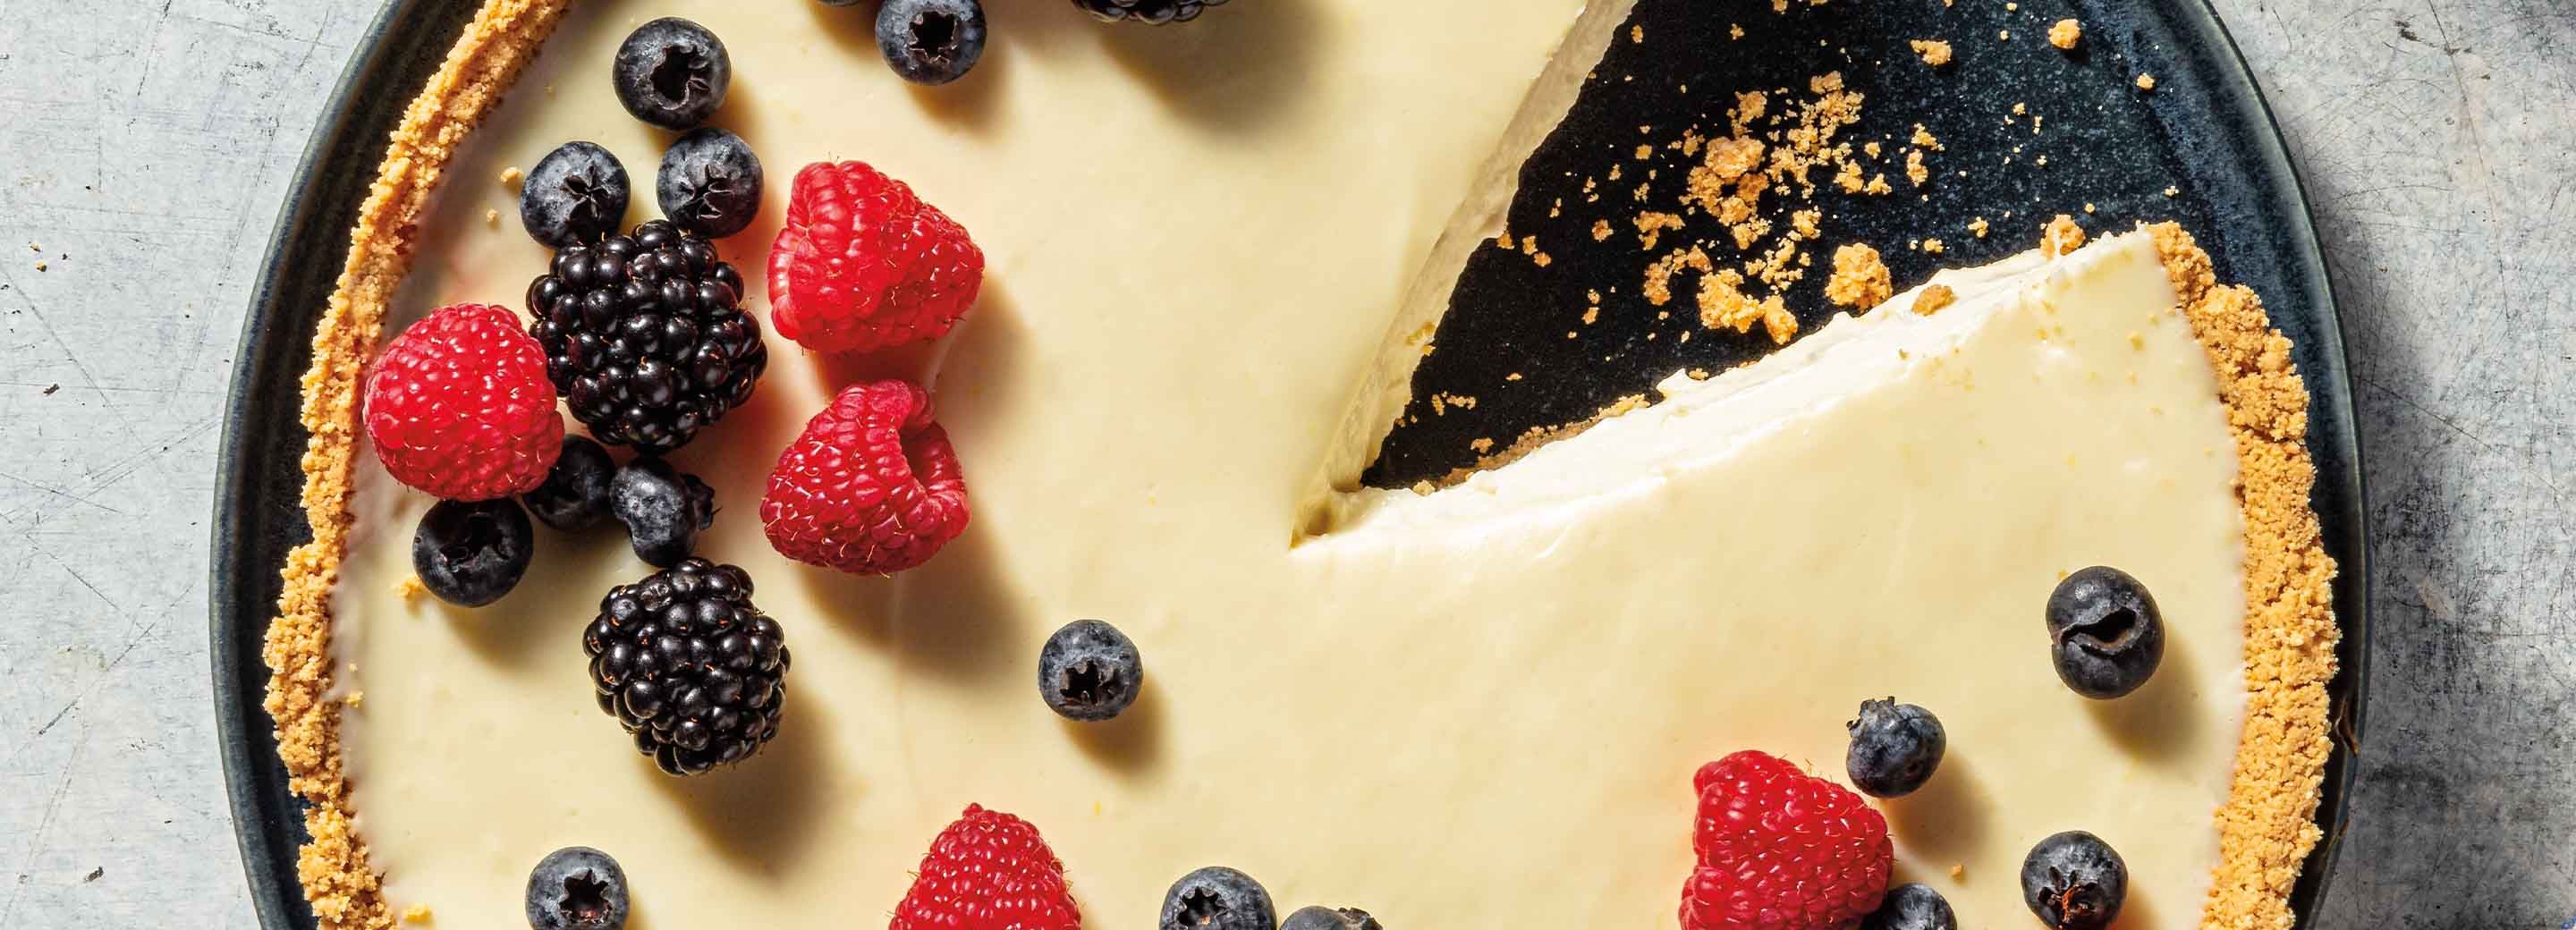 No-Bake Cheesecake with Fresh Berries